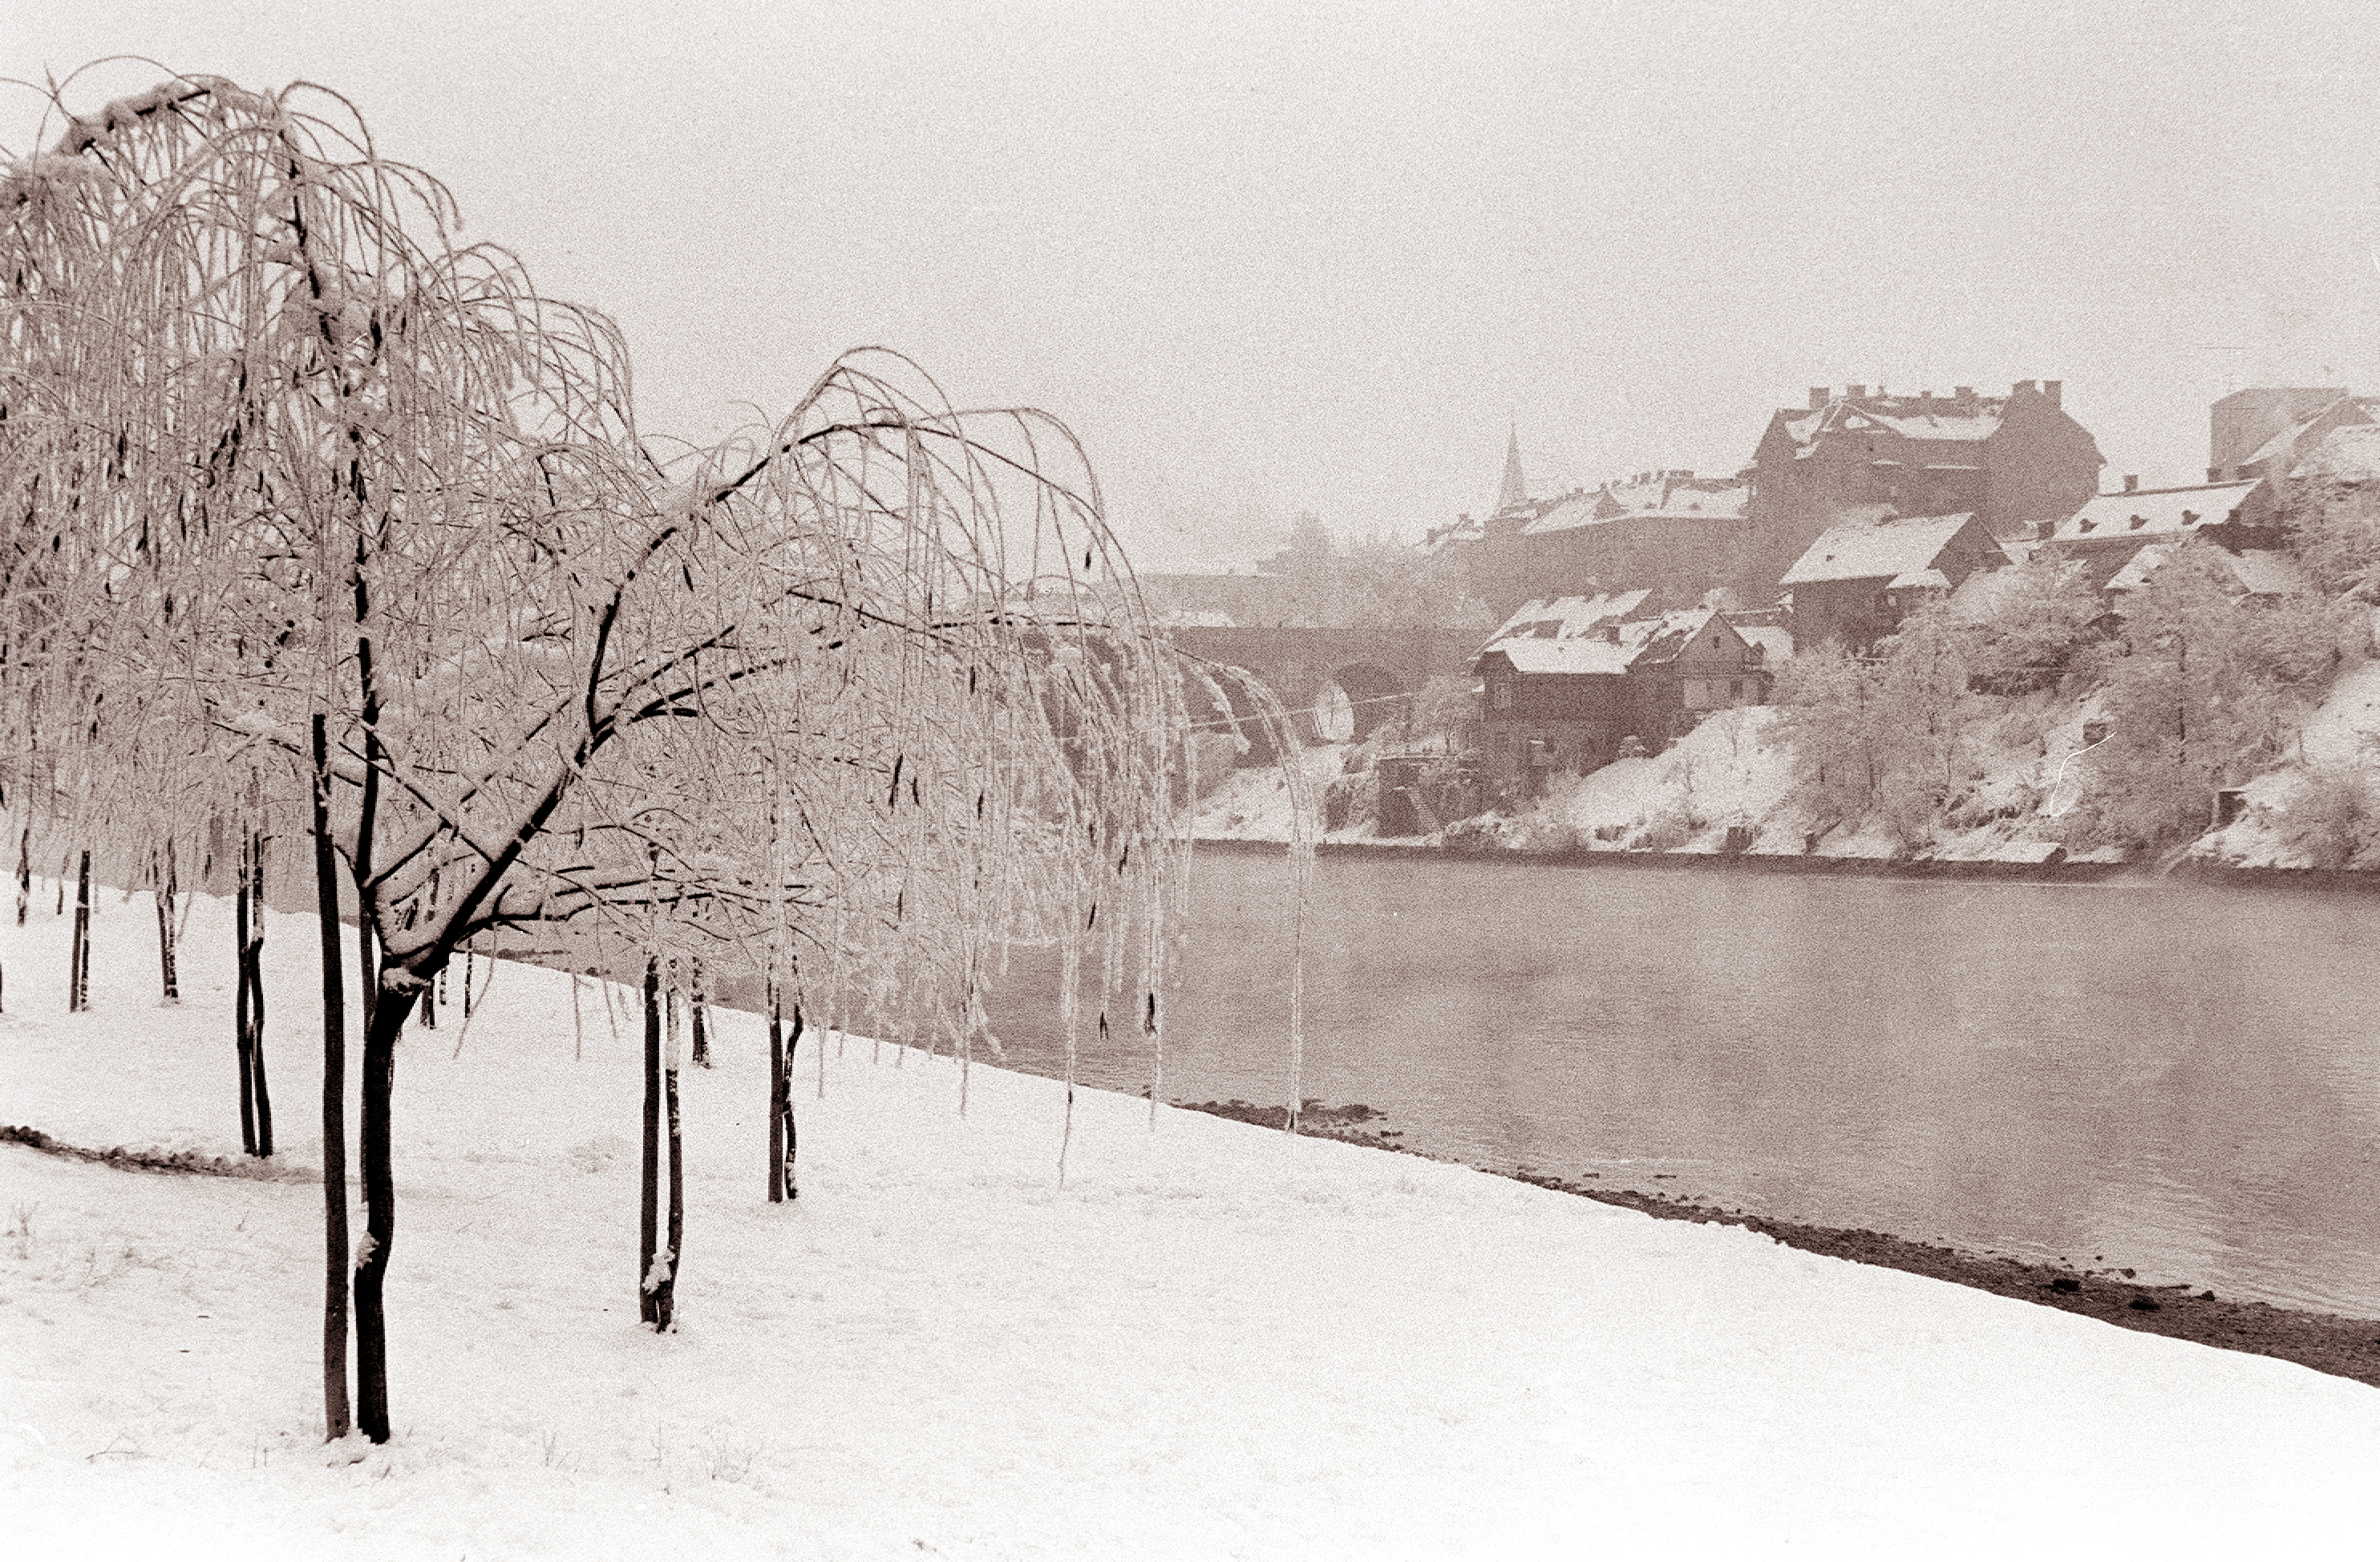 Sneg v starem delu Maribora 1962